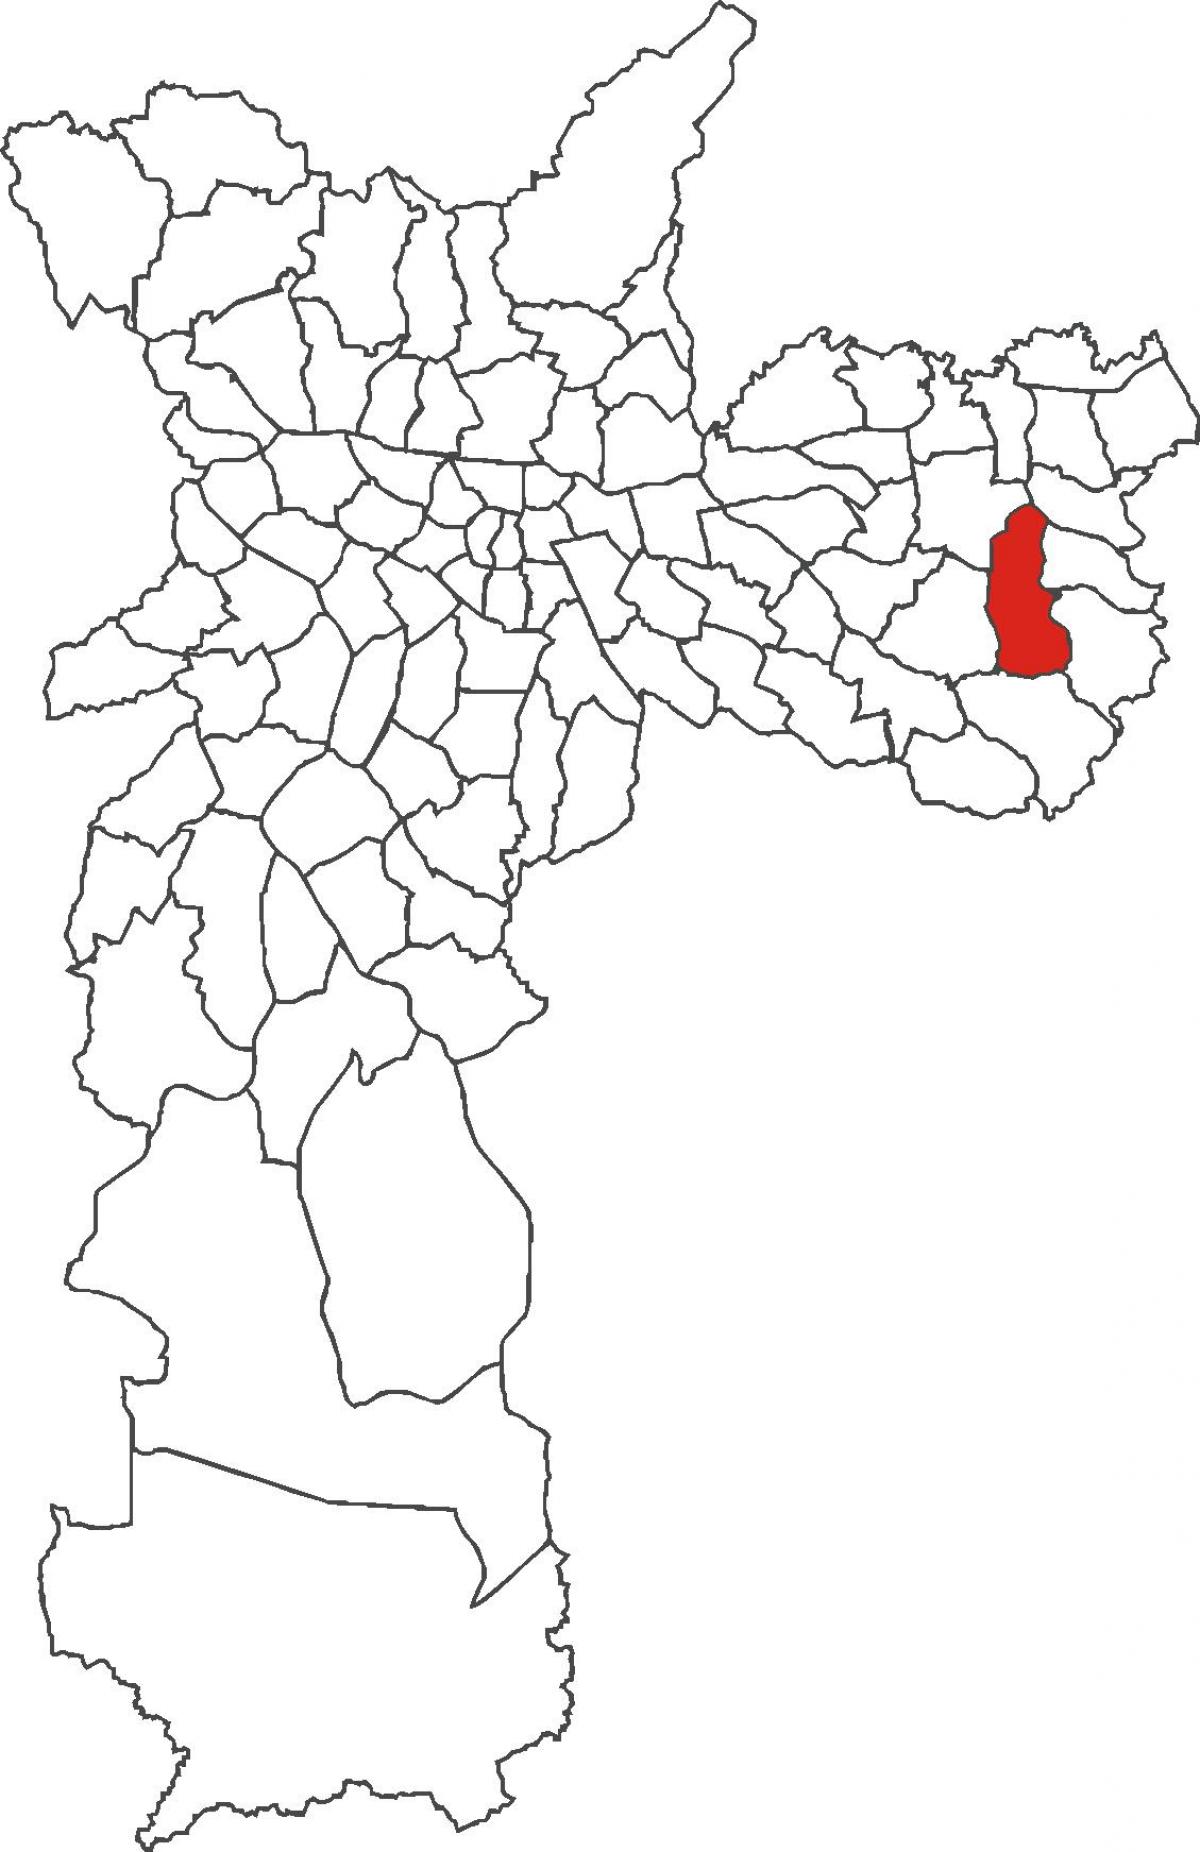 نقشہ کے جوس Bonifácio ضلع